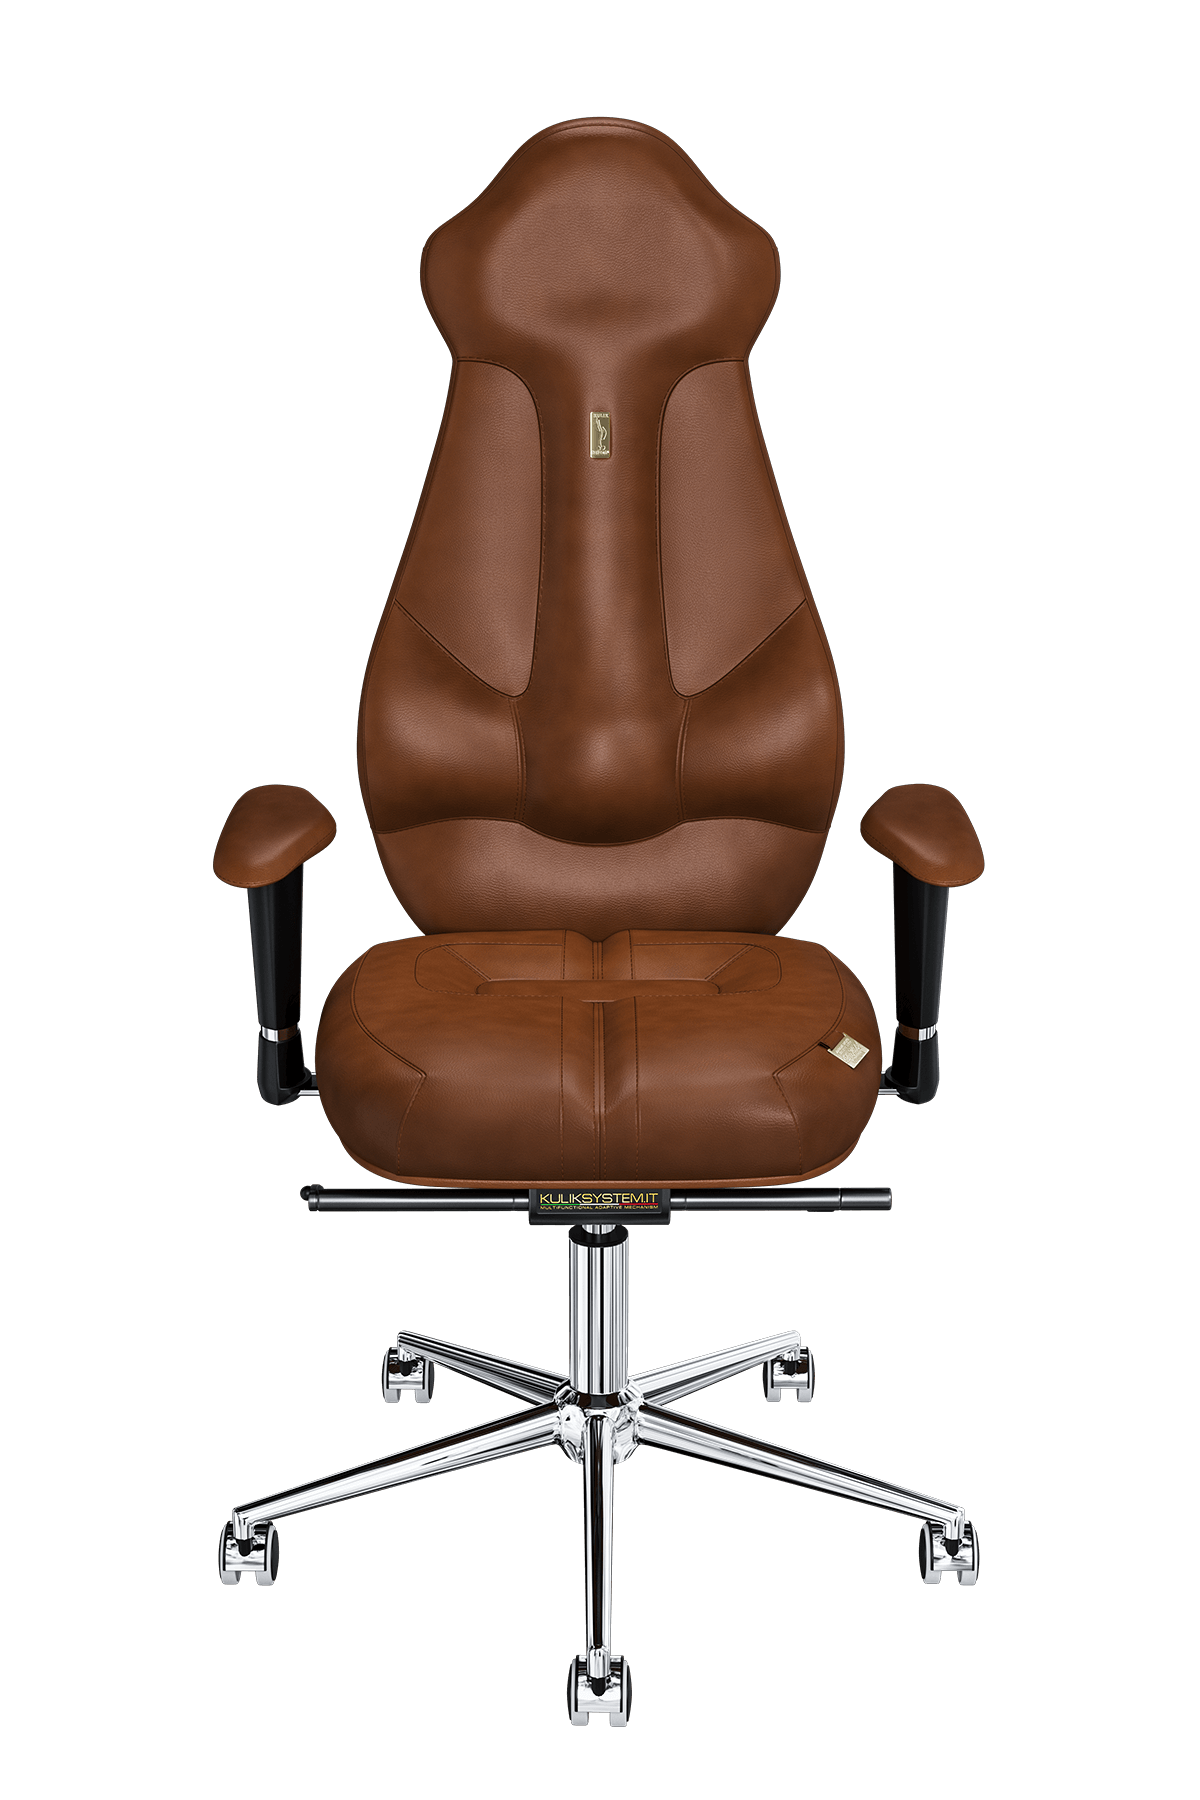 Ergonomic chair KULIK SYSTEM Imperial